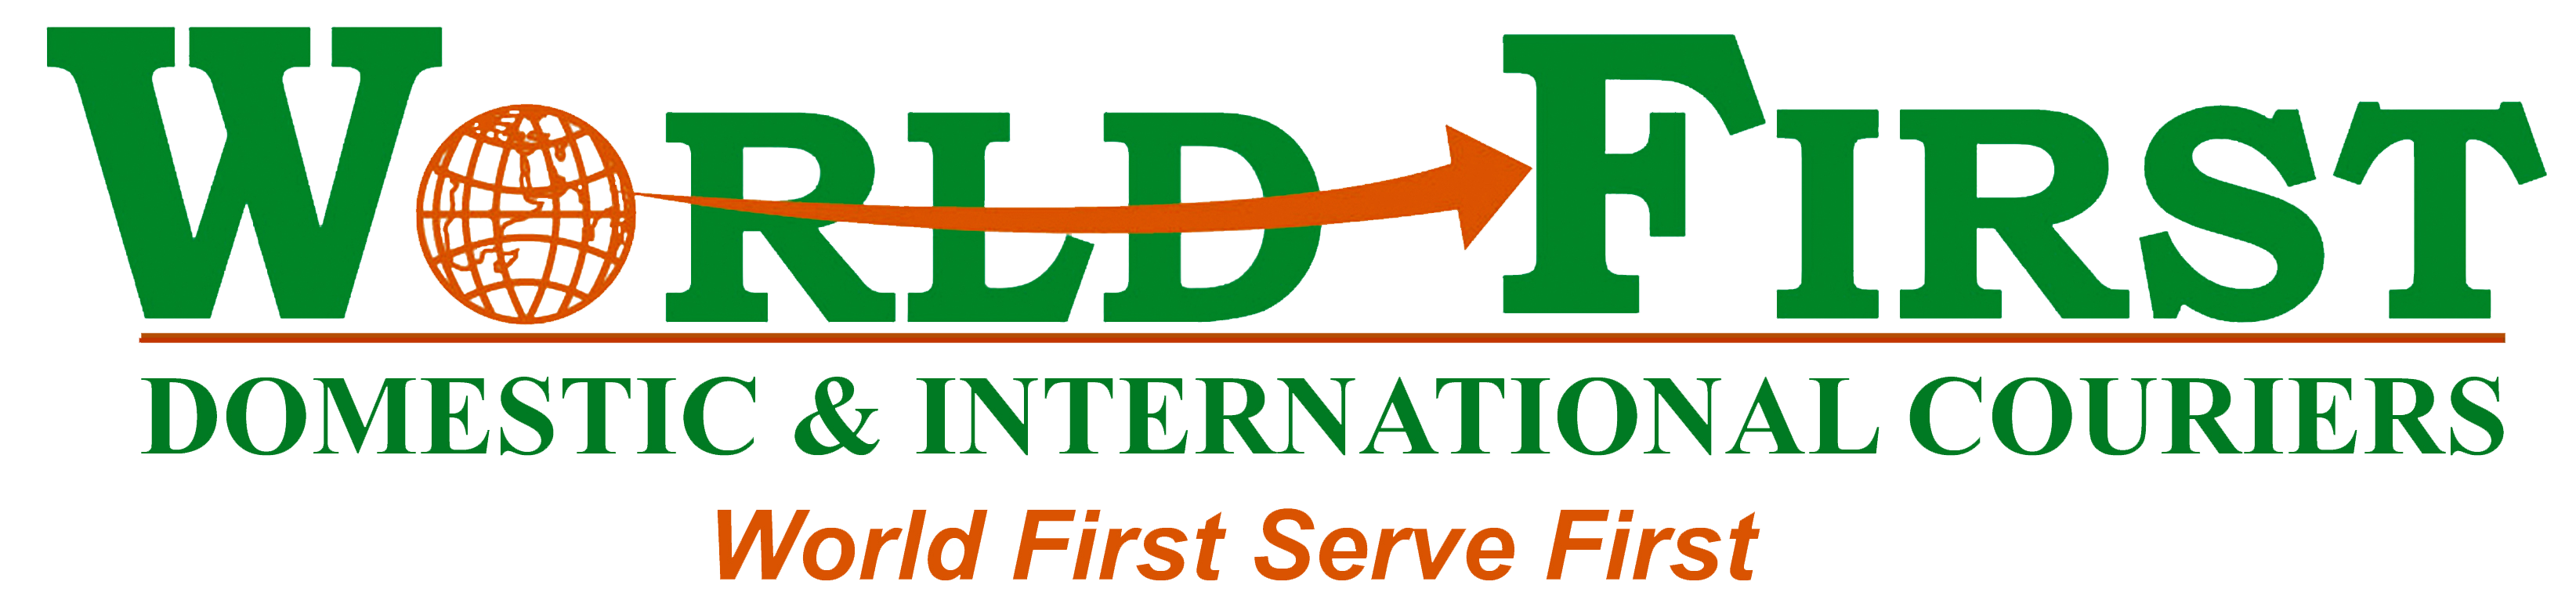 World First Courier Logo